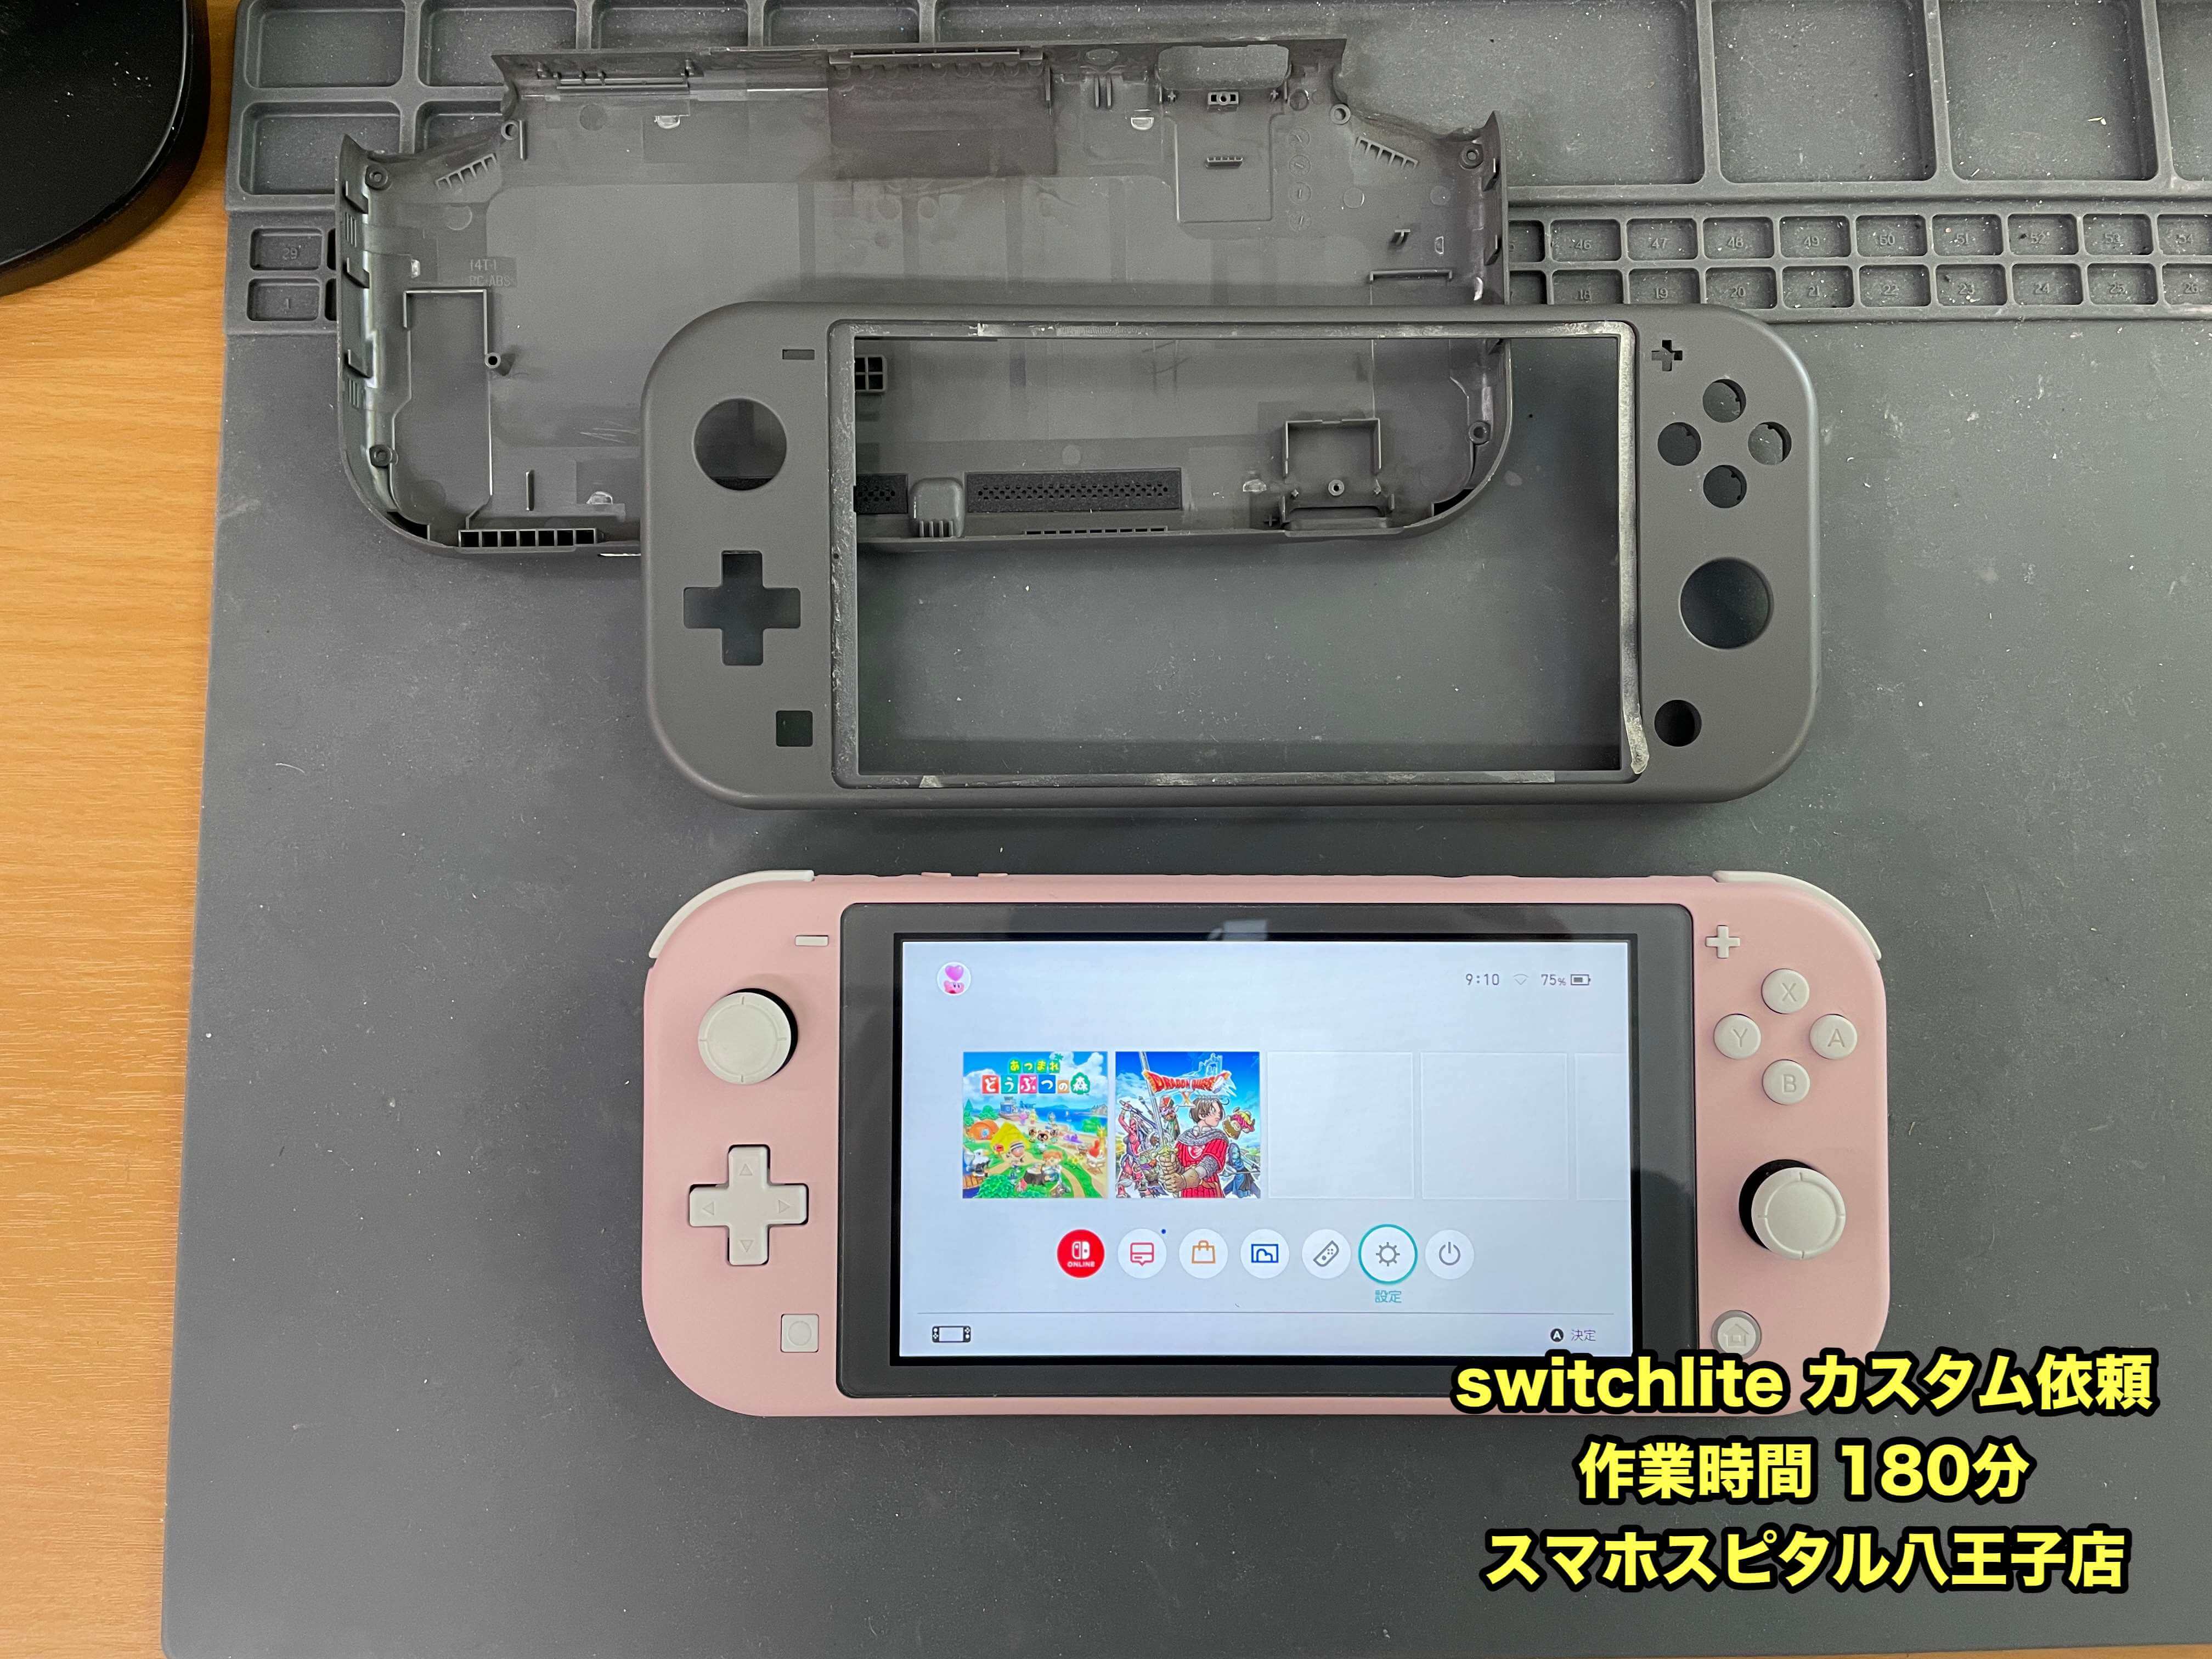 Nintendo Switch Lite 外装カスタム代行のご依頼を頂きました！外装 